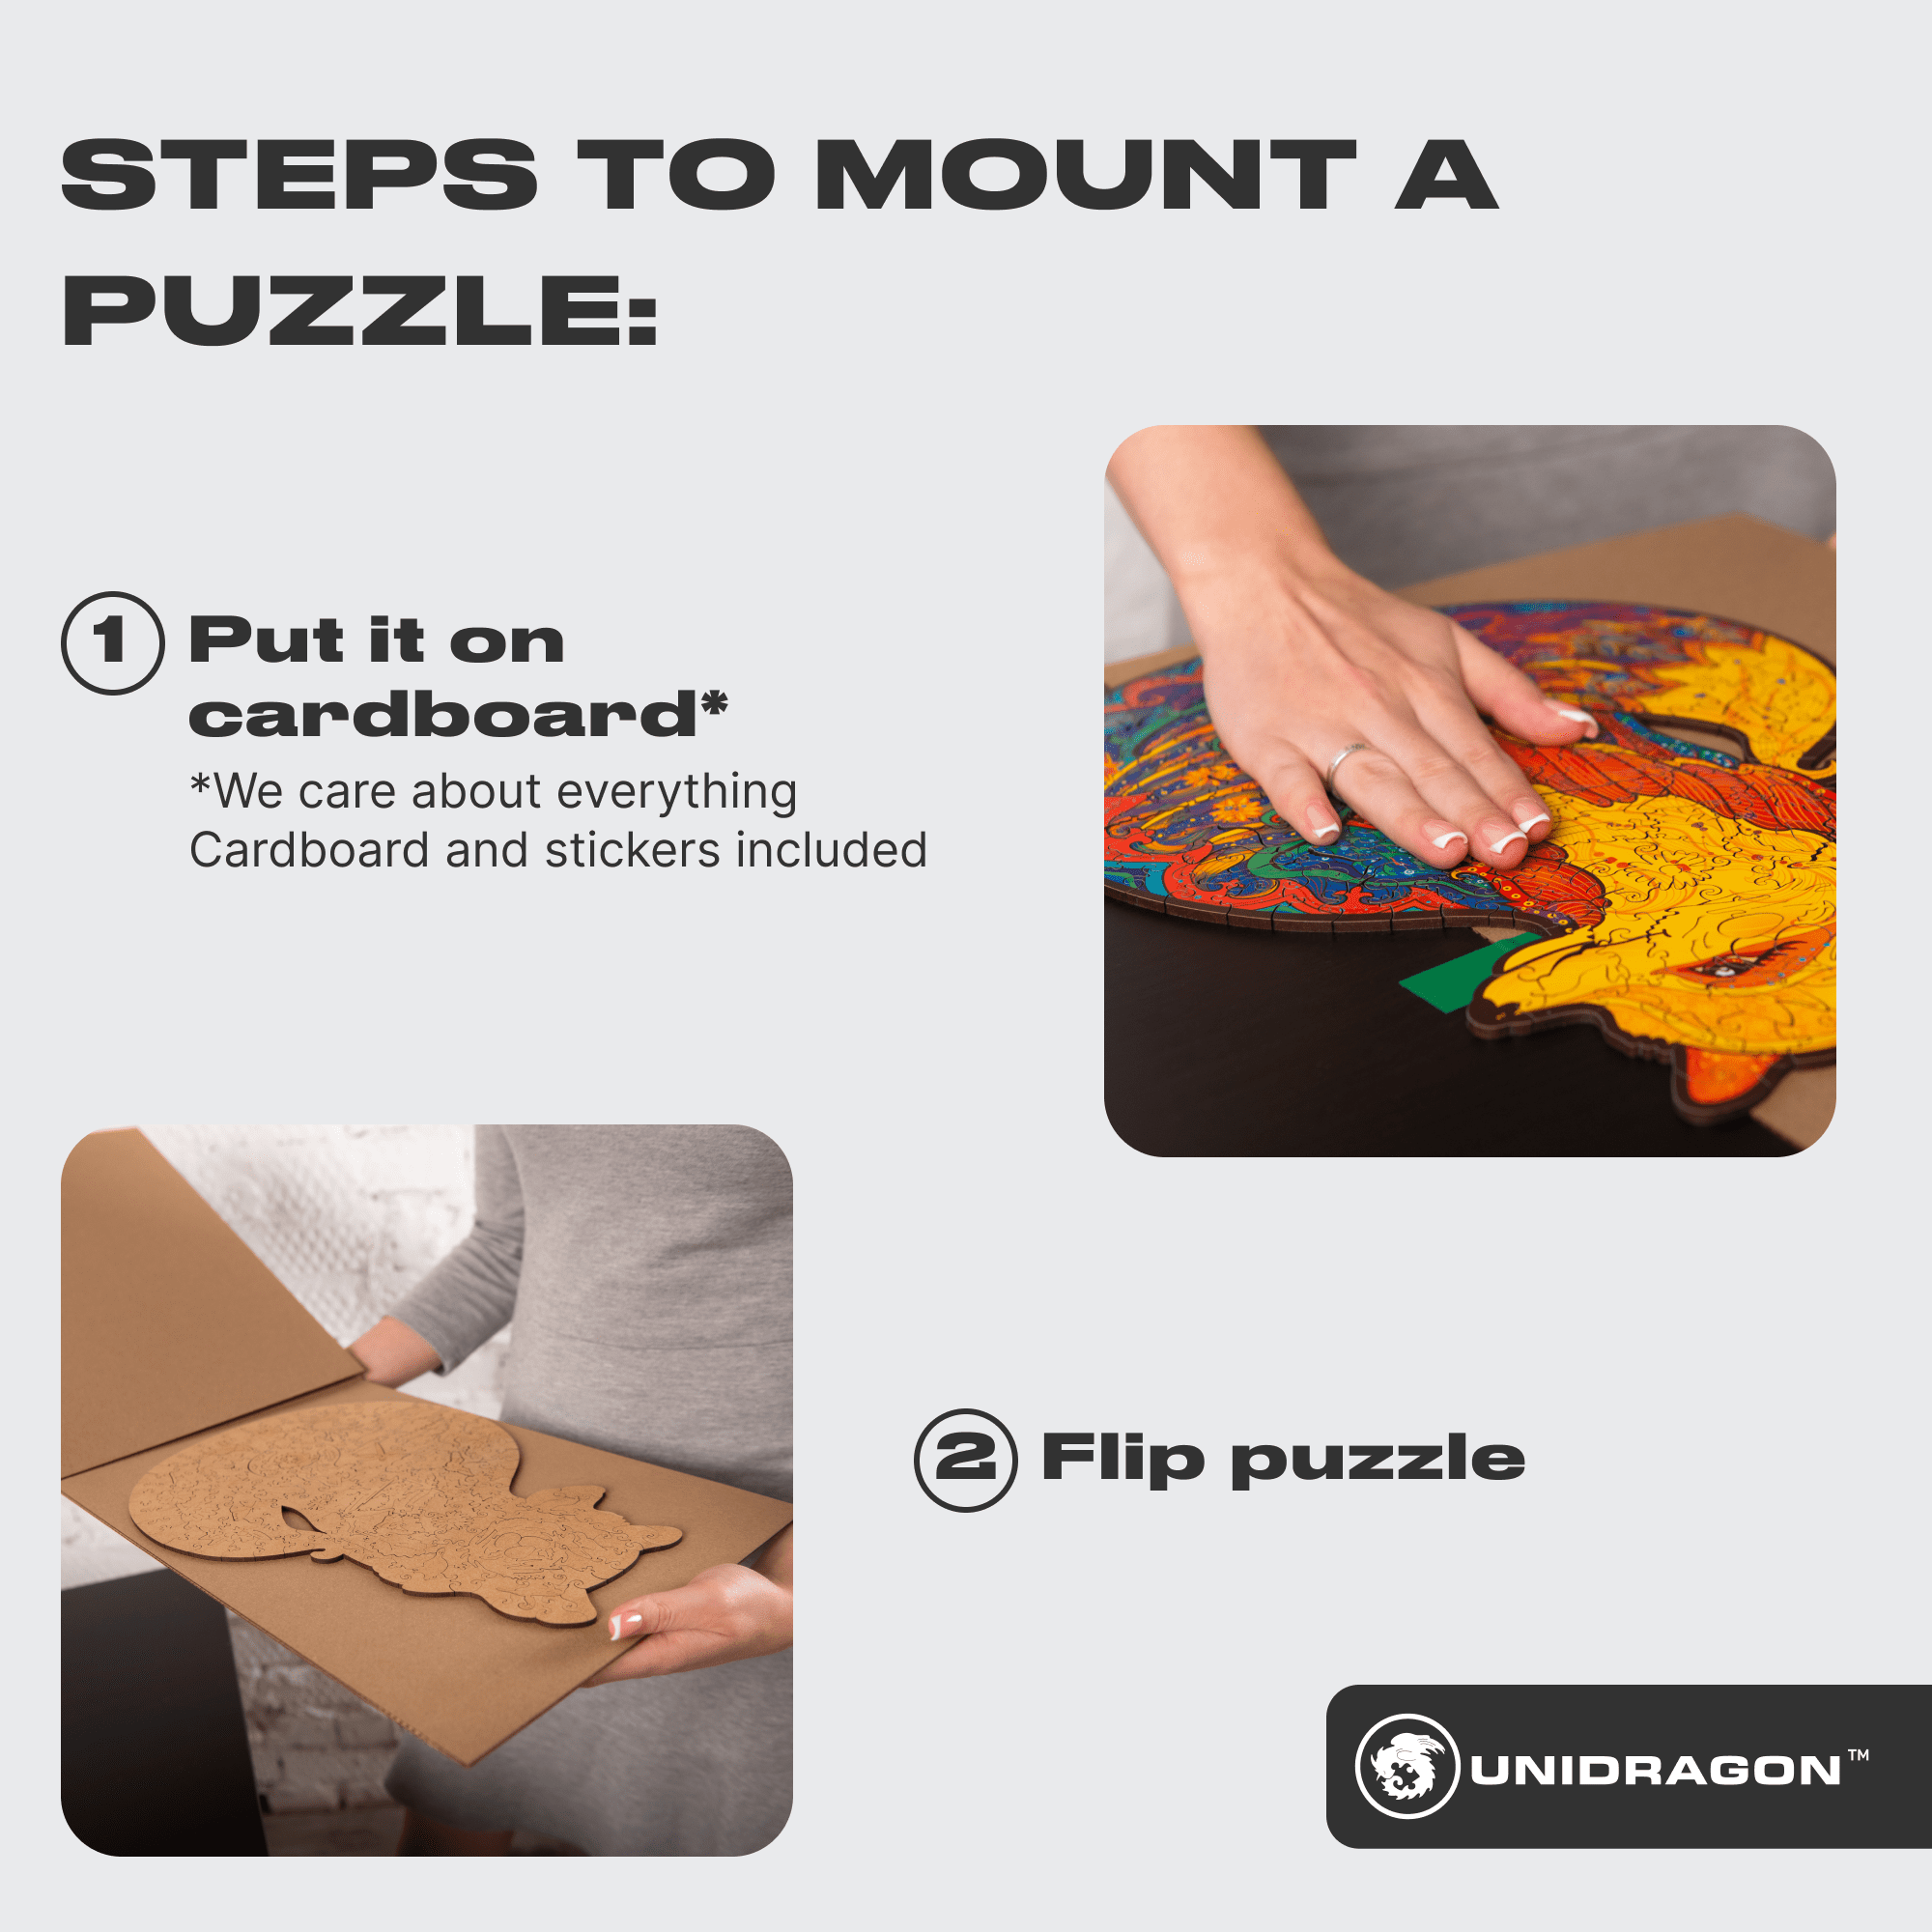 Unidragon Puzzle Set for mounting puzzles